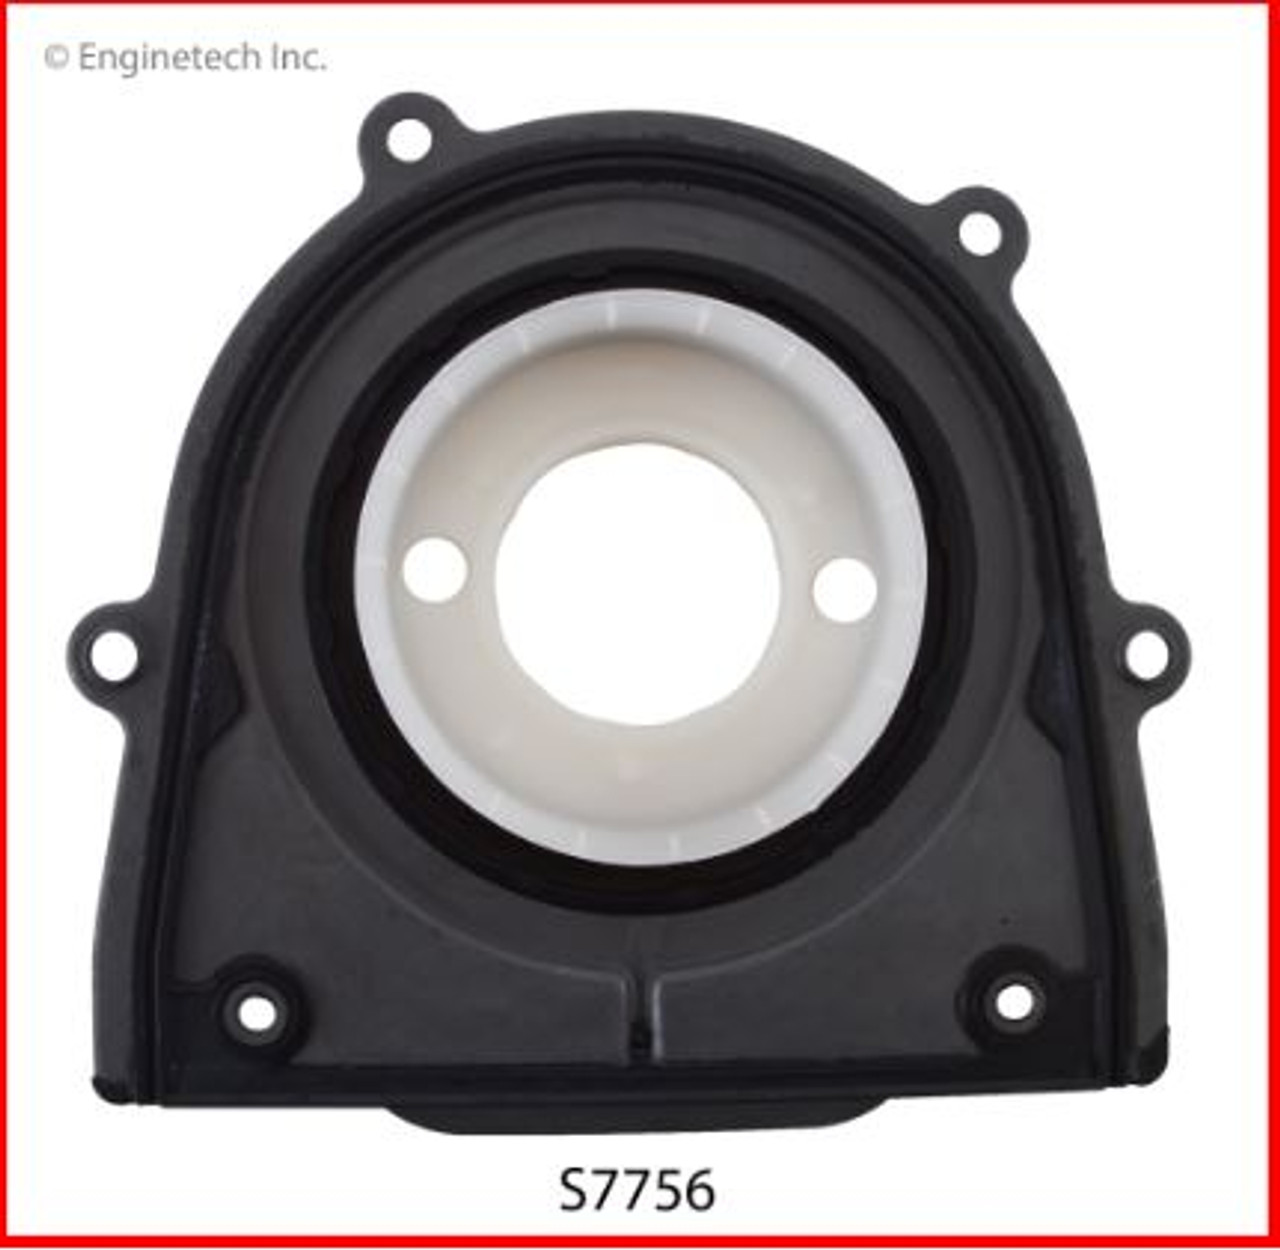 Crankshaft Seal - 2011 Mazda 3 2.3L (S7756.K145)